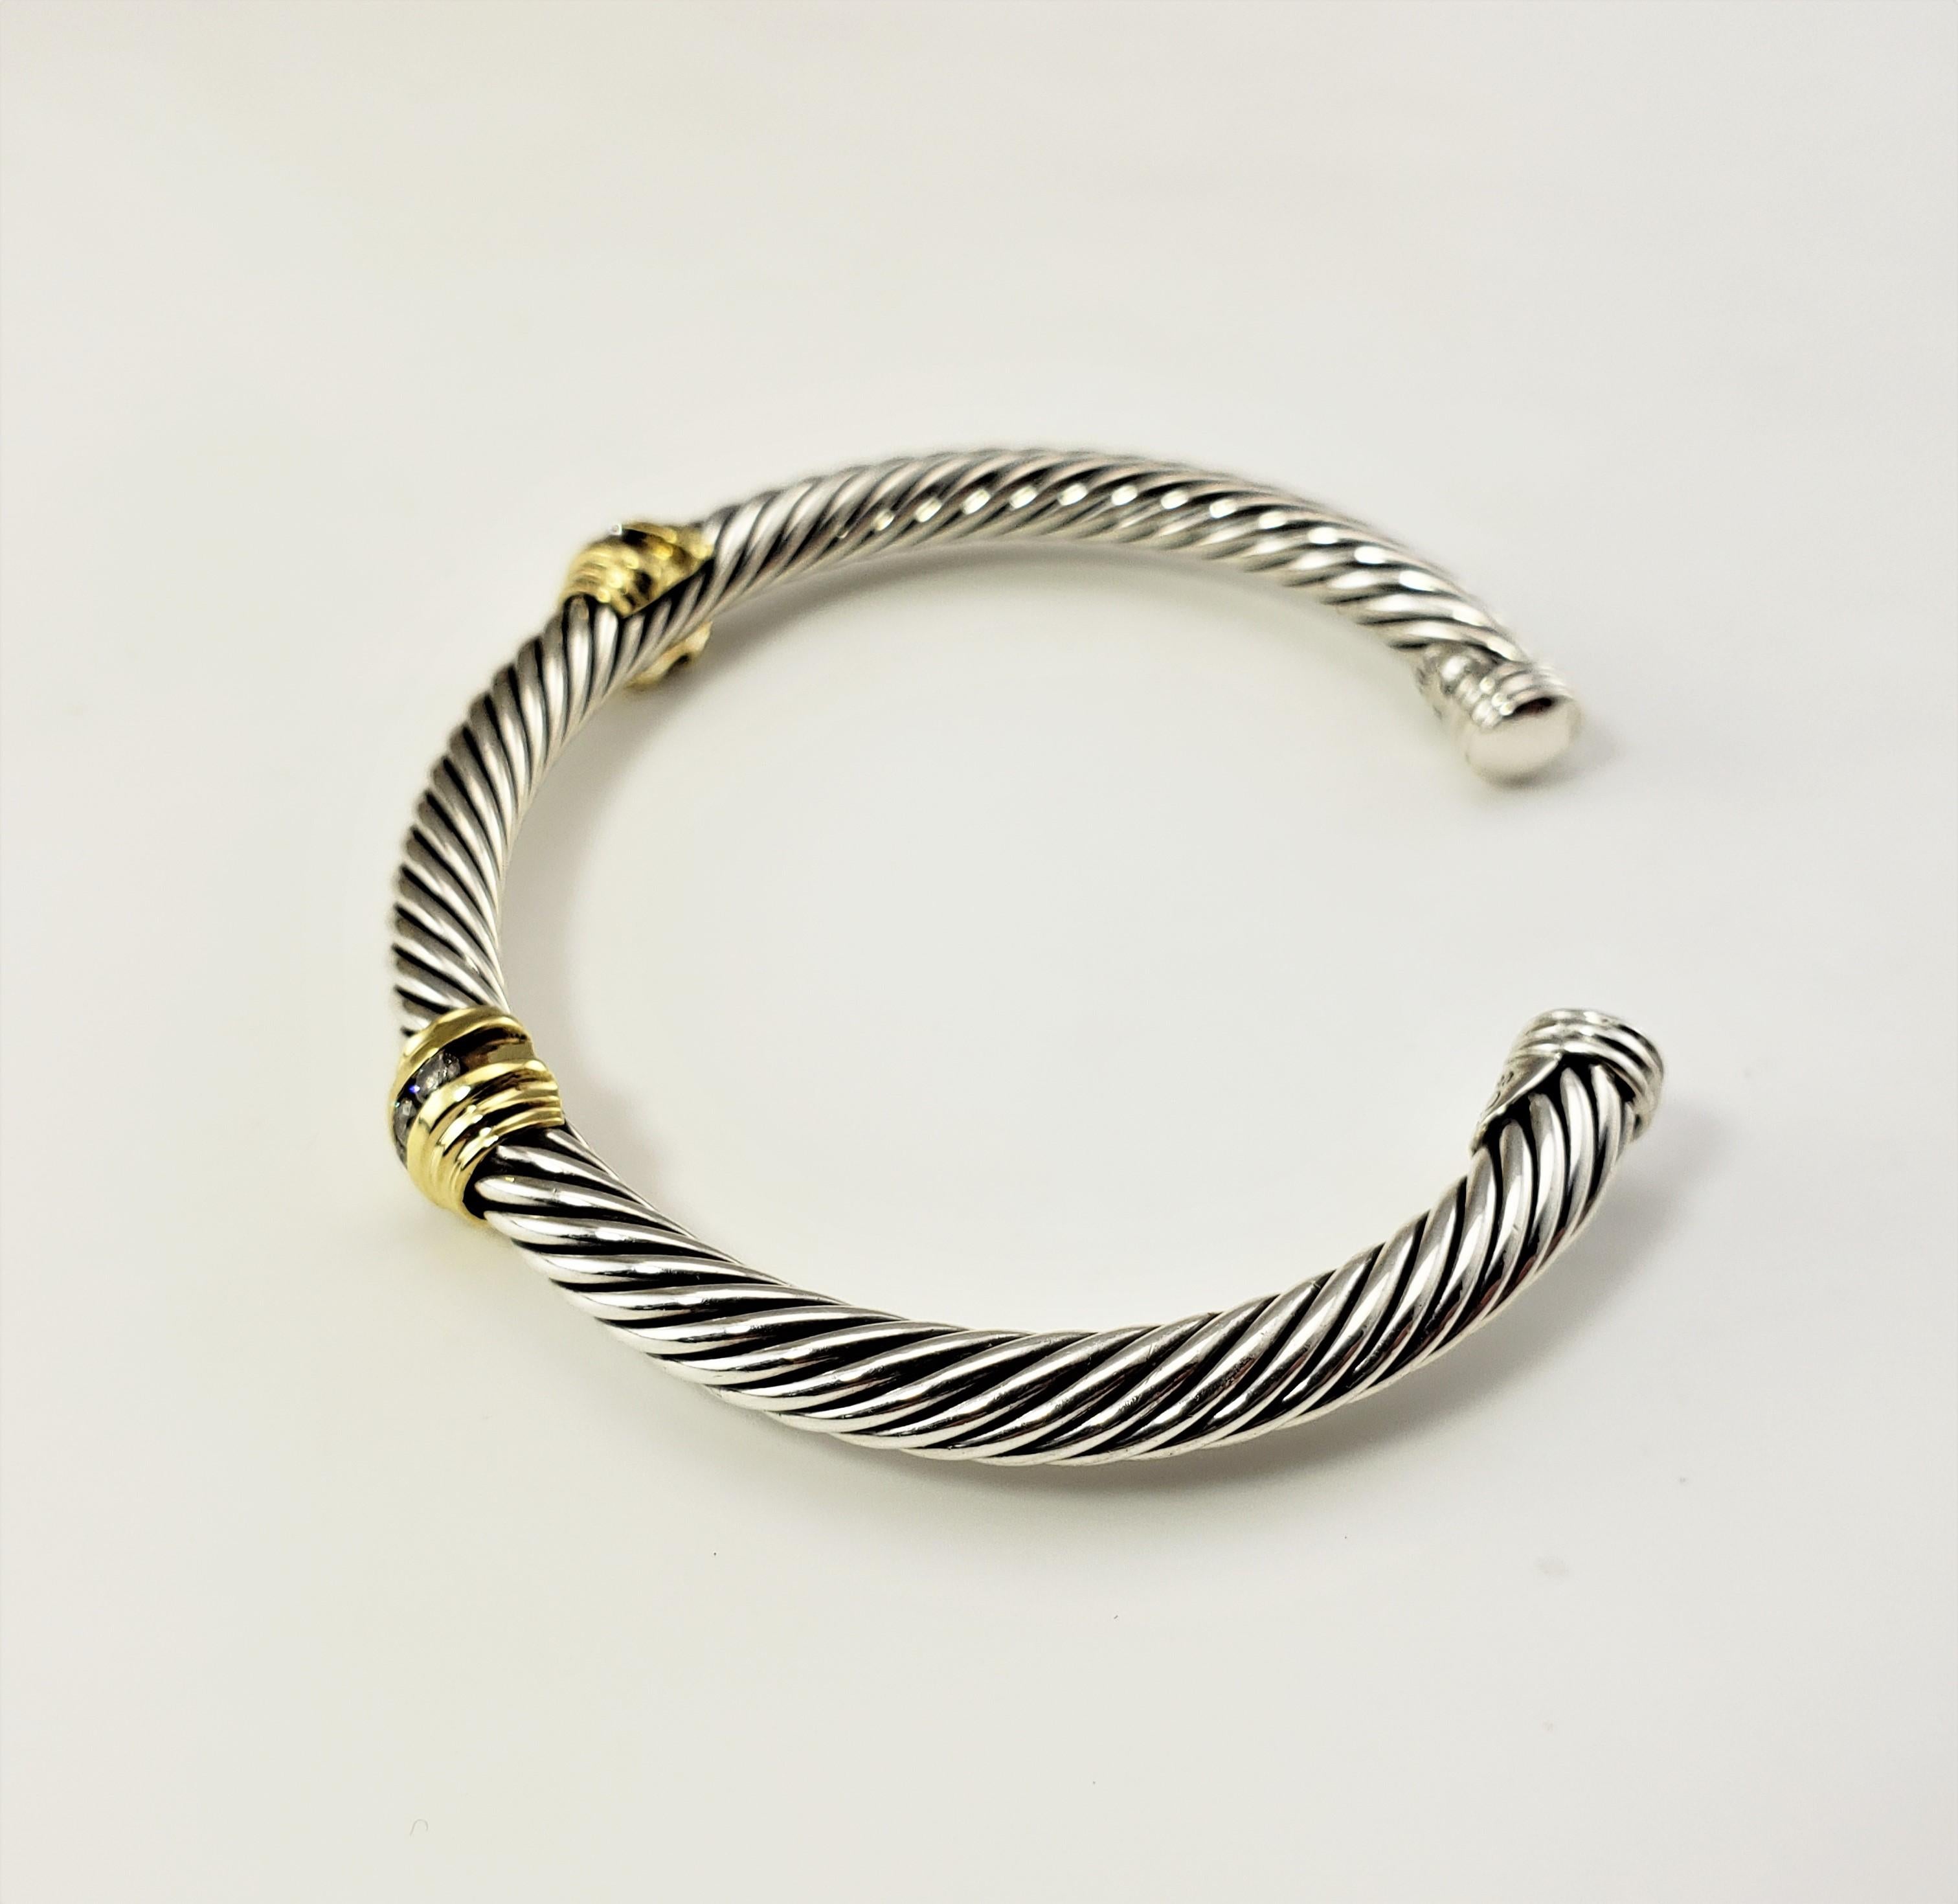 Brilliant Cut David Yurman Sterling Silver/18 Karat Yellow Gold and Diamond Cable Cuff Bracele